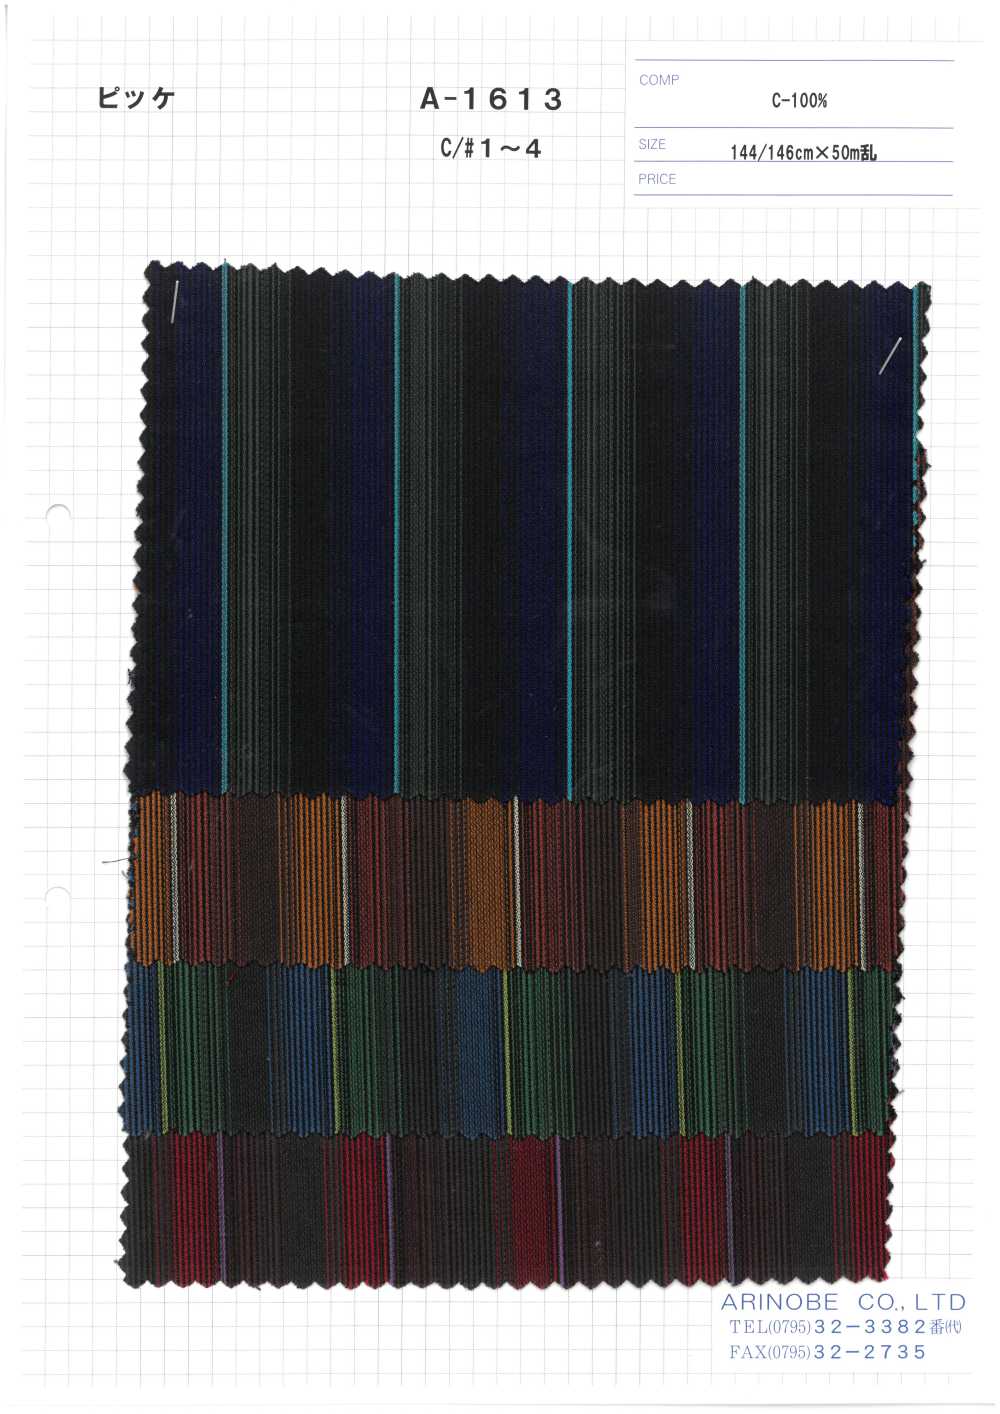 A-1613 Cotton Pique[Textile / Fabric] ARINOBE CO., LTD.